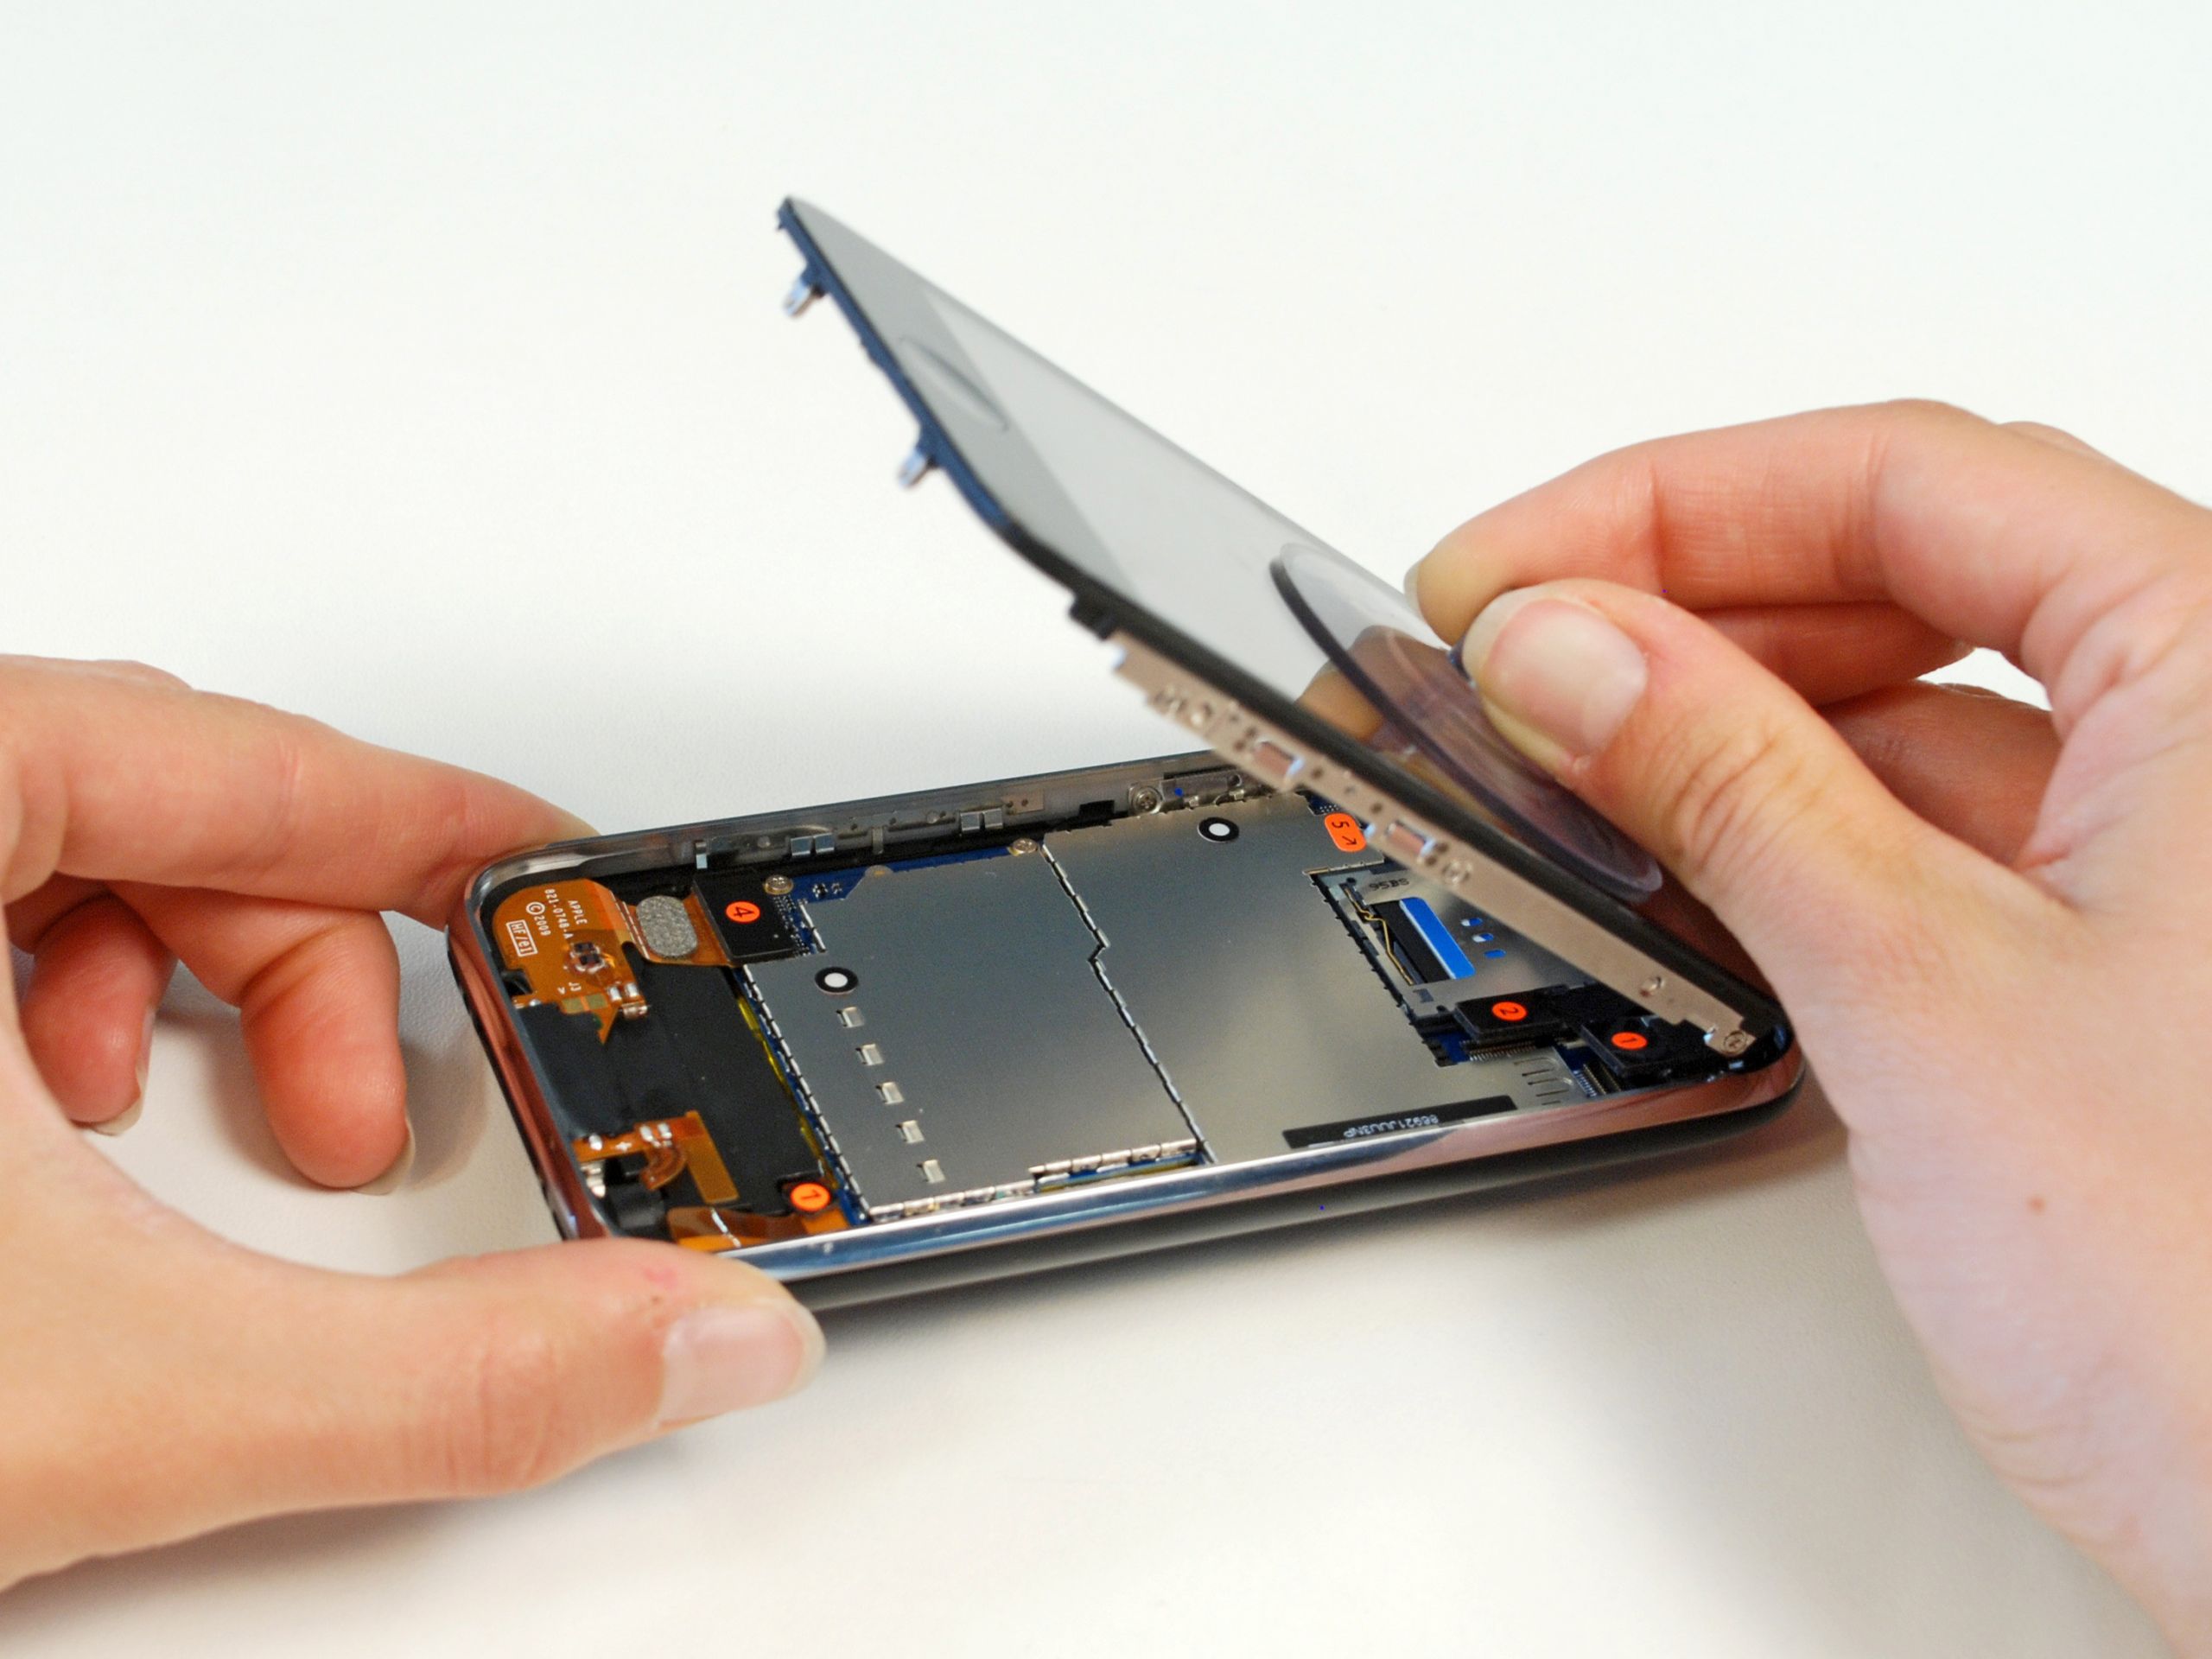 DIY Fix Cracked Screen
 Replacing A Damaged iPhone Screen A DIY Repair That Can